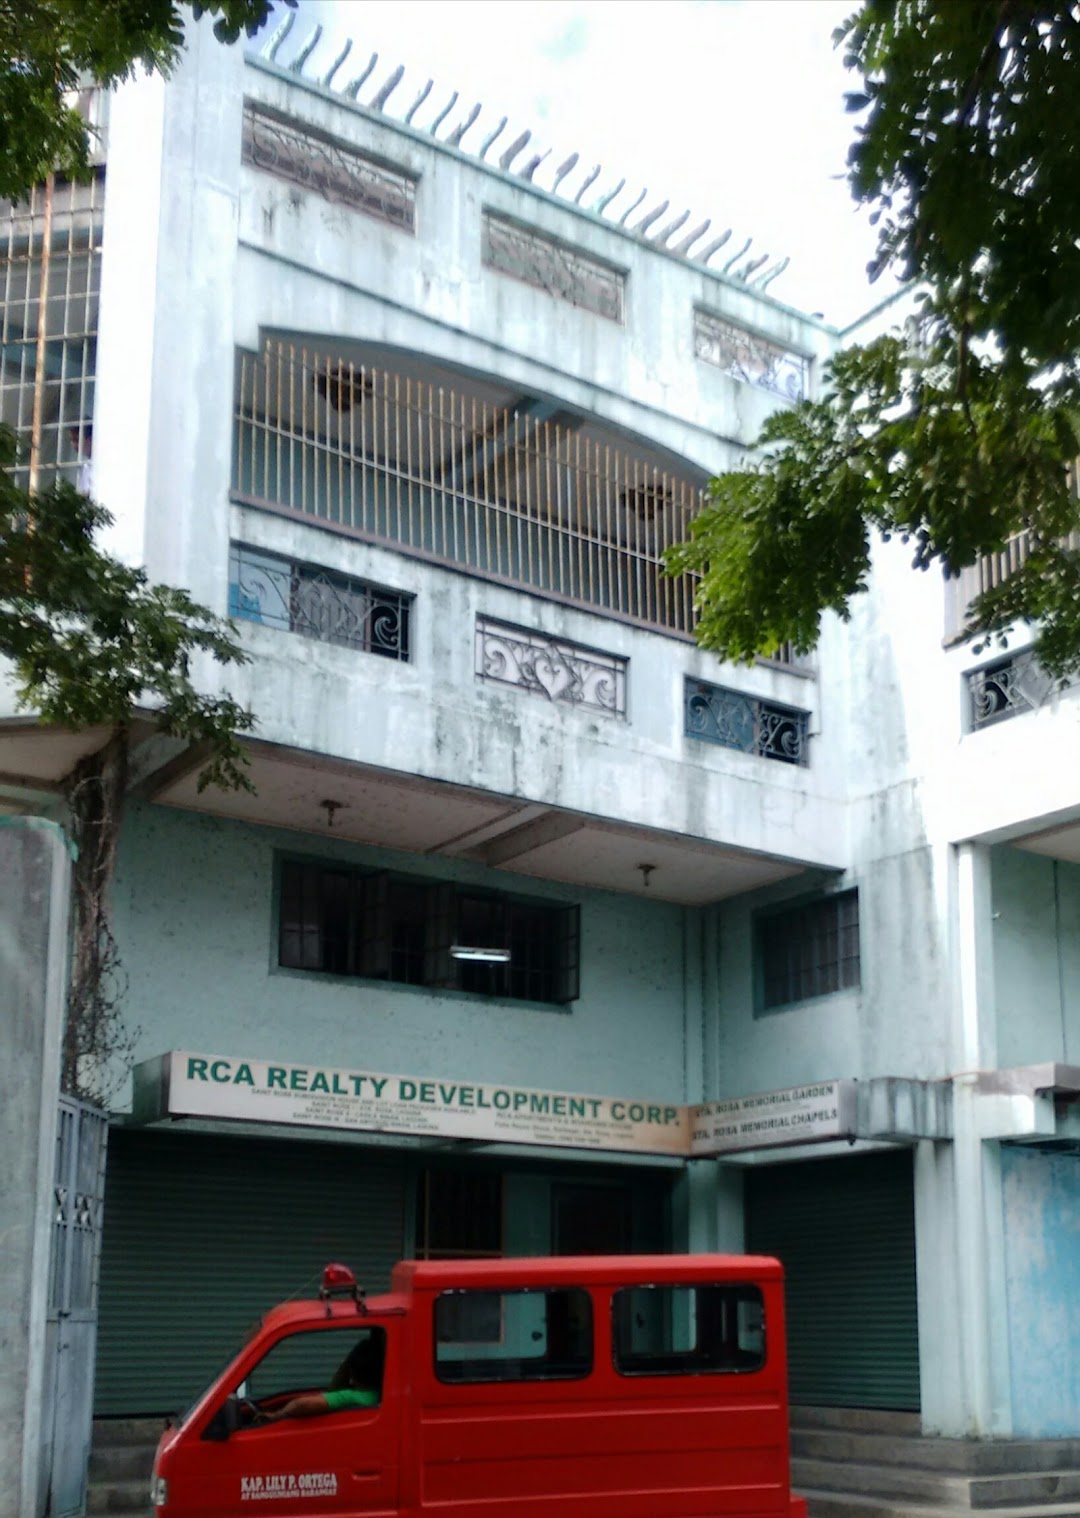 RCA Realty Development Corp.